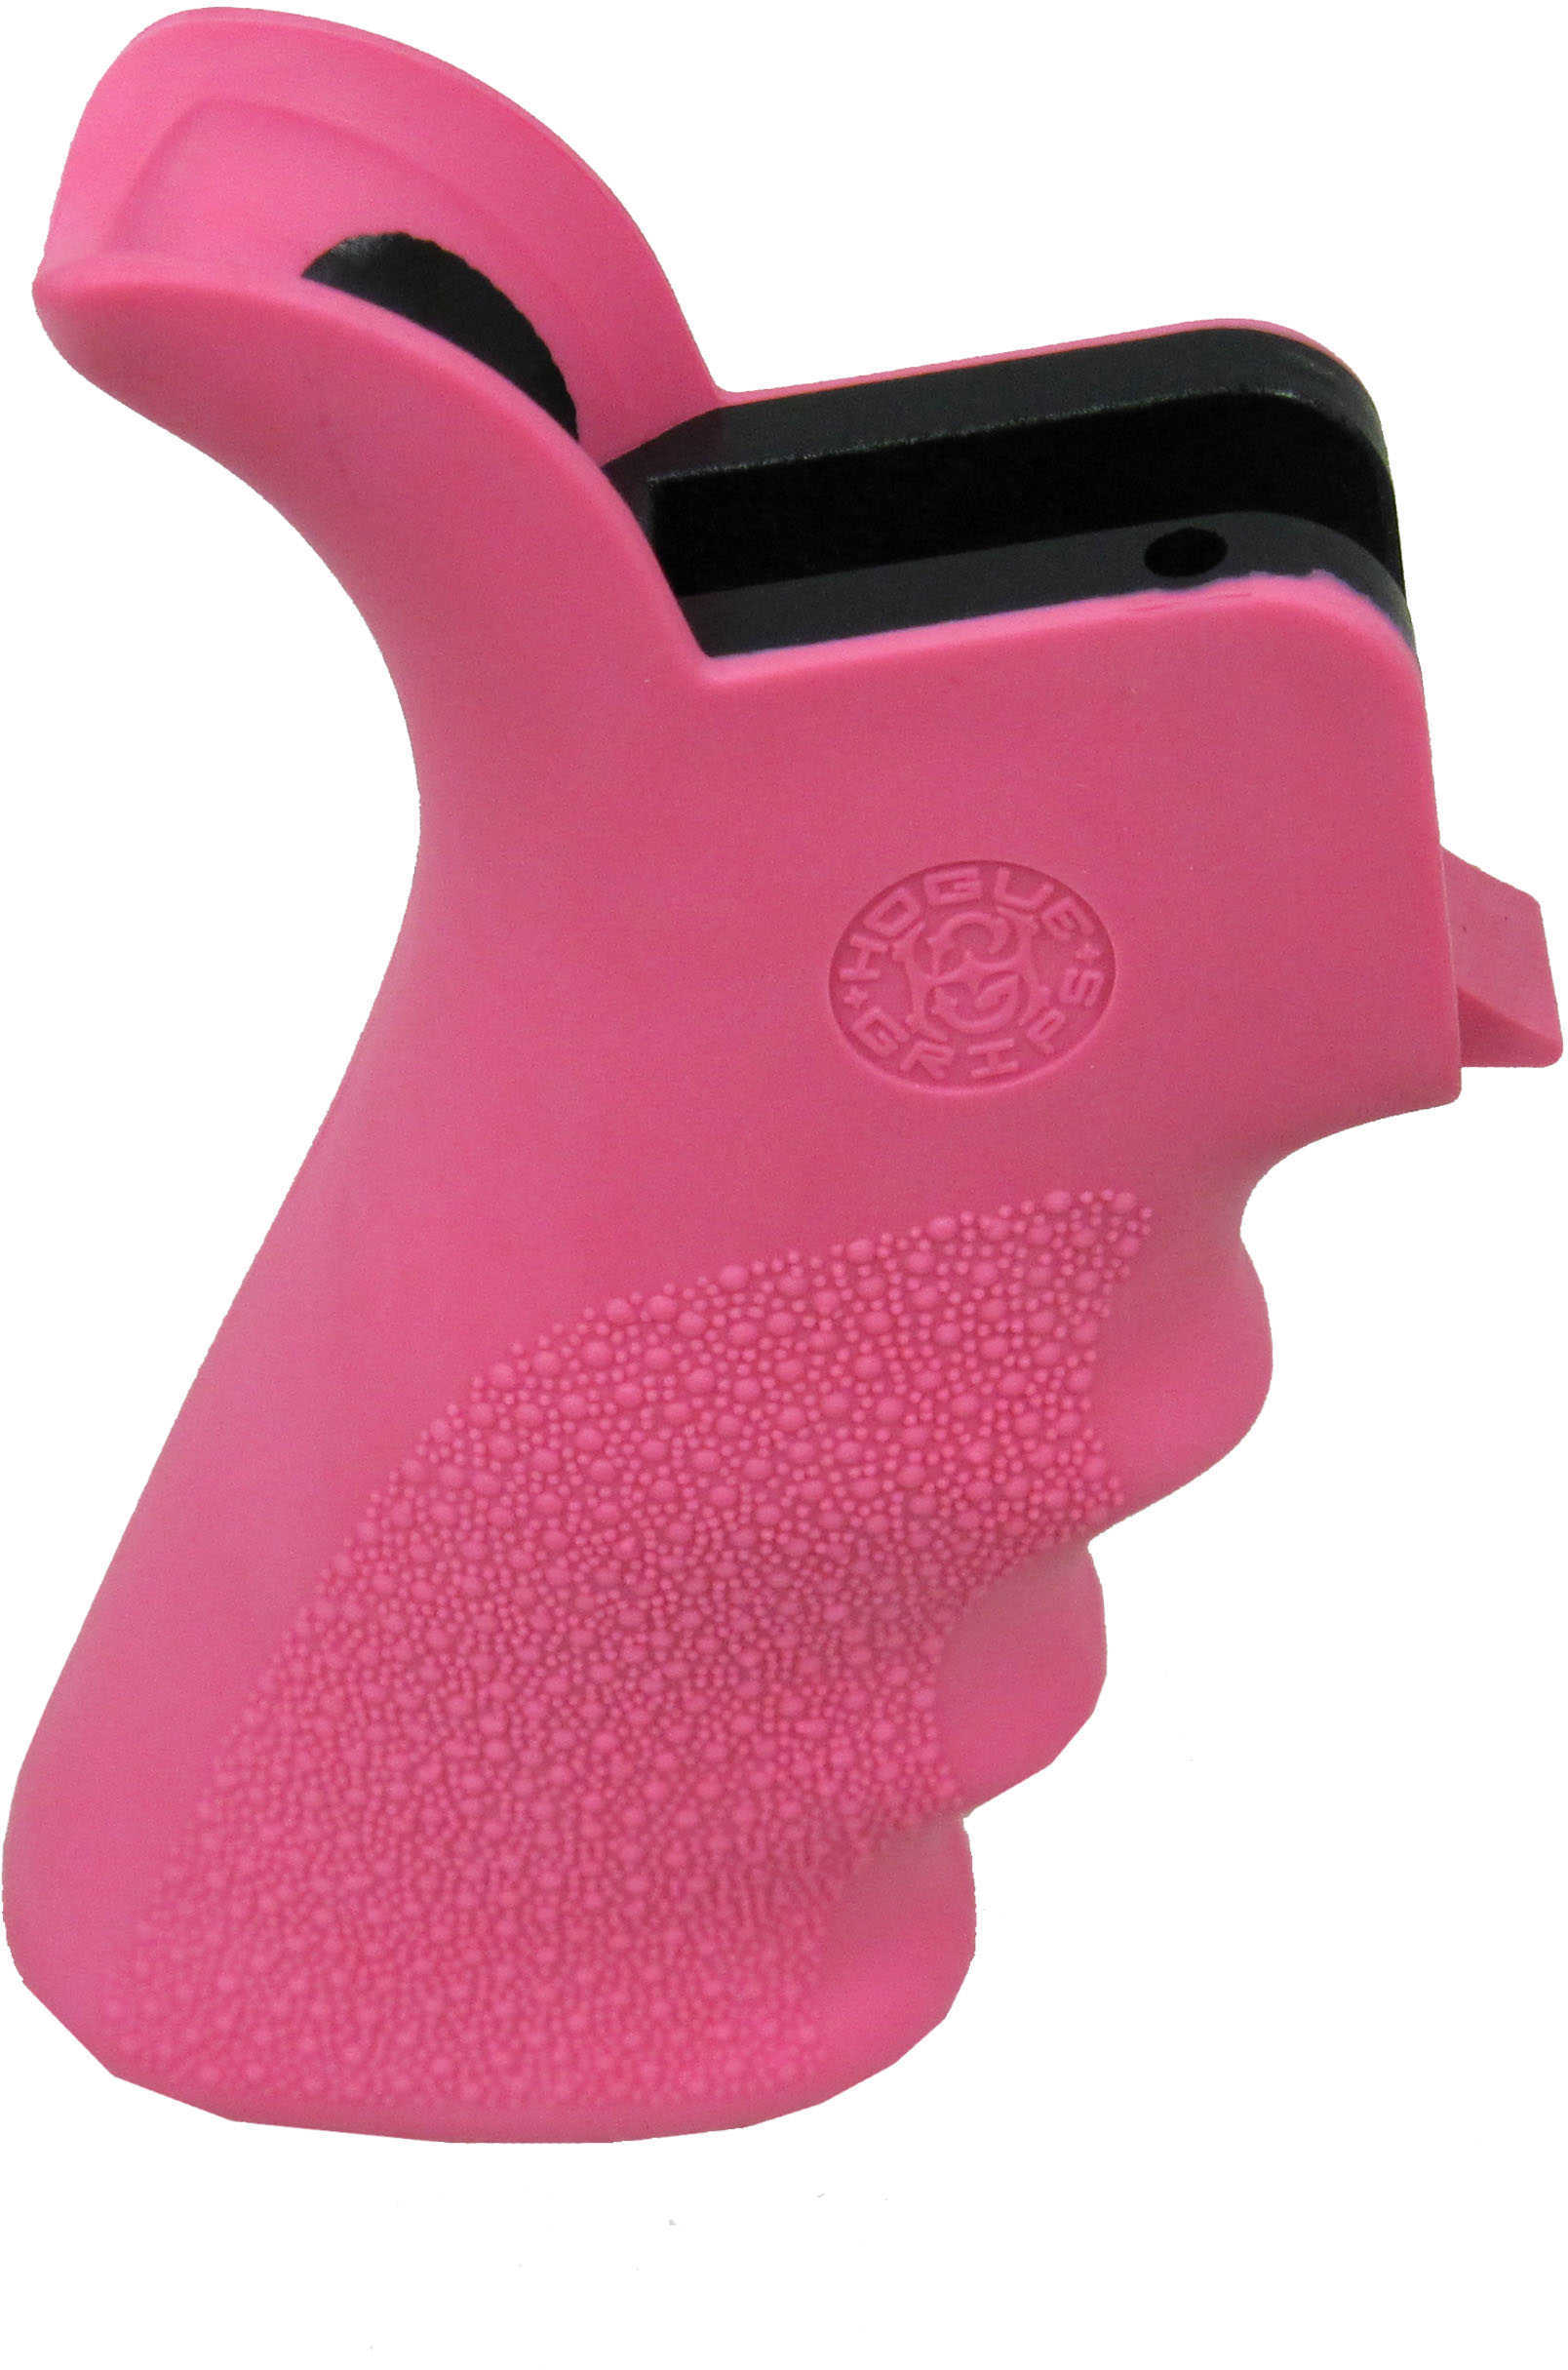 Hogue AR-15 Rubber Grip Beavertail w/Finger Grooves Pink 15027